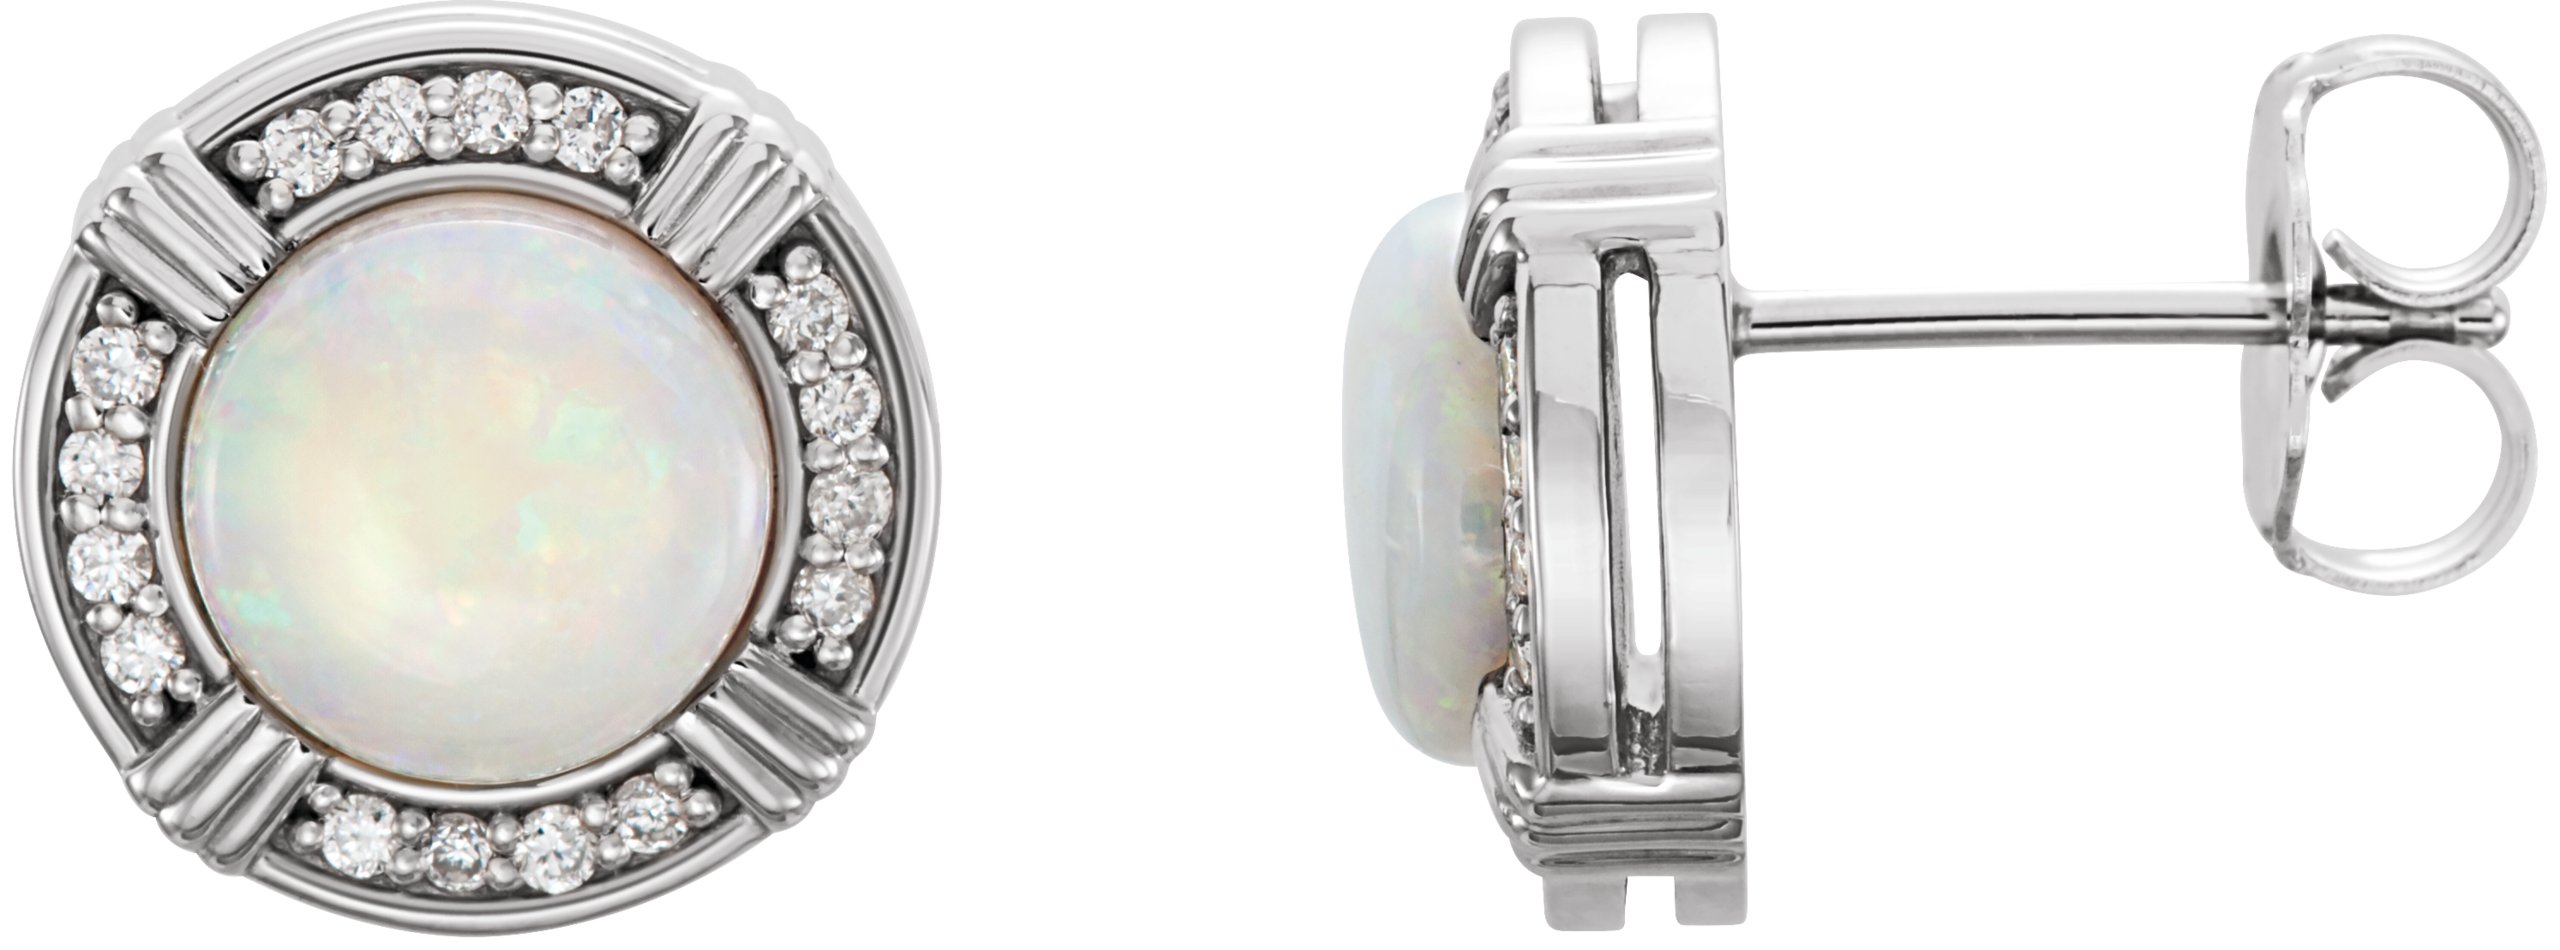 Opal & Diamond Halo-Style Earrings or Mounting